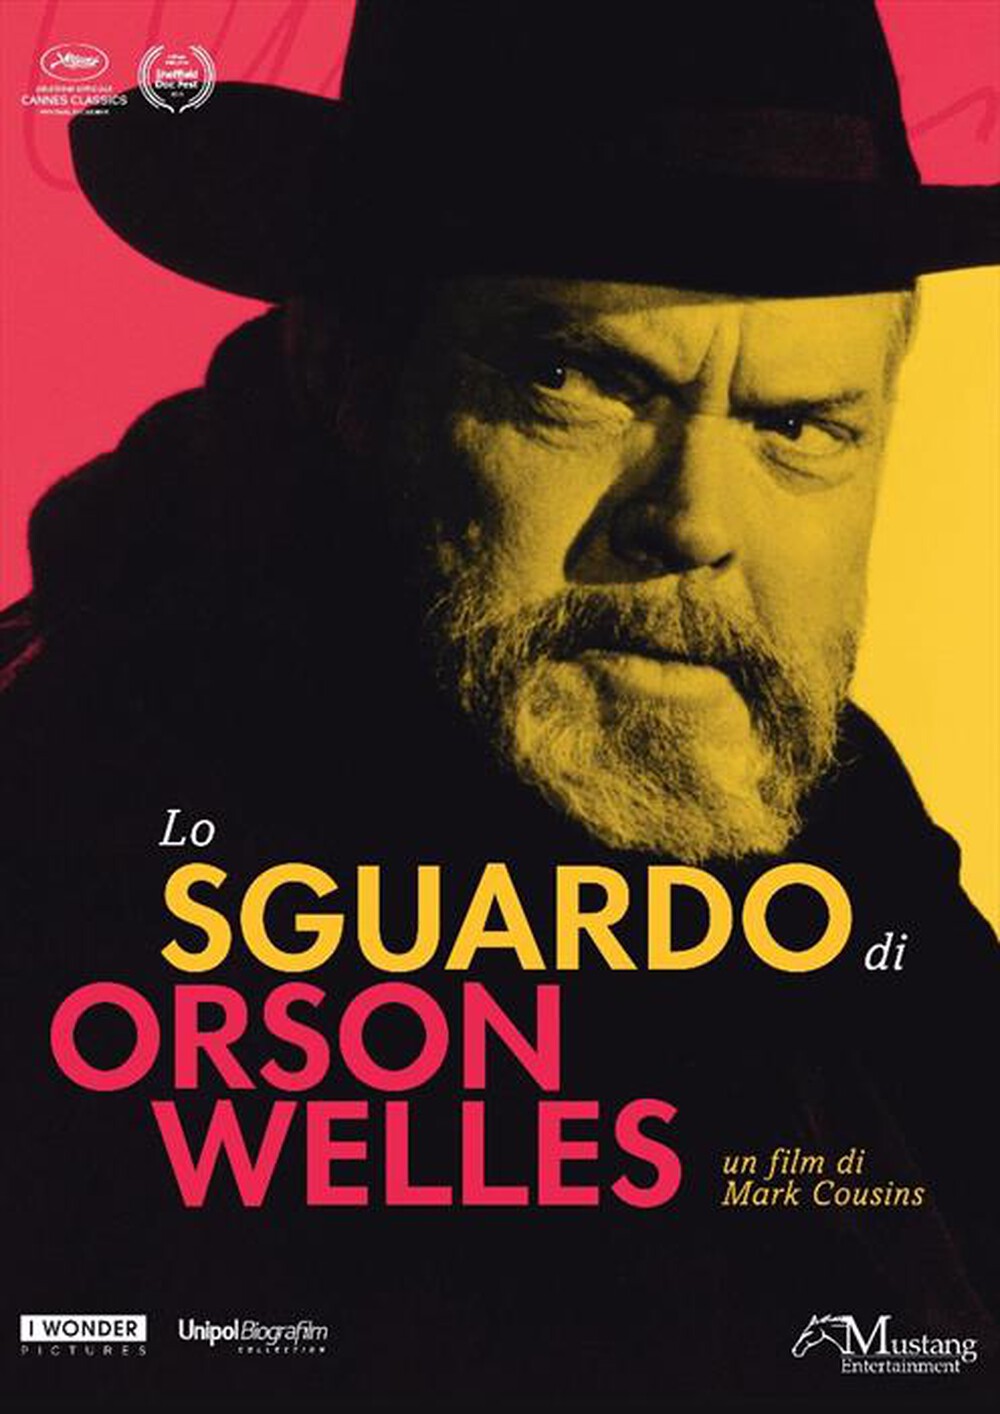 "I Wonder - Sguardo Di Orson Welles (Lo)"